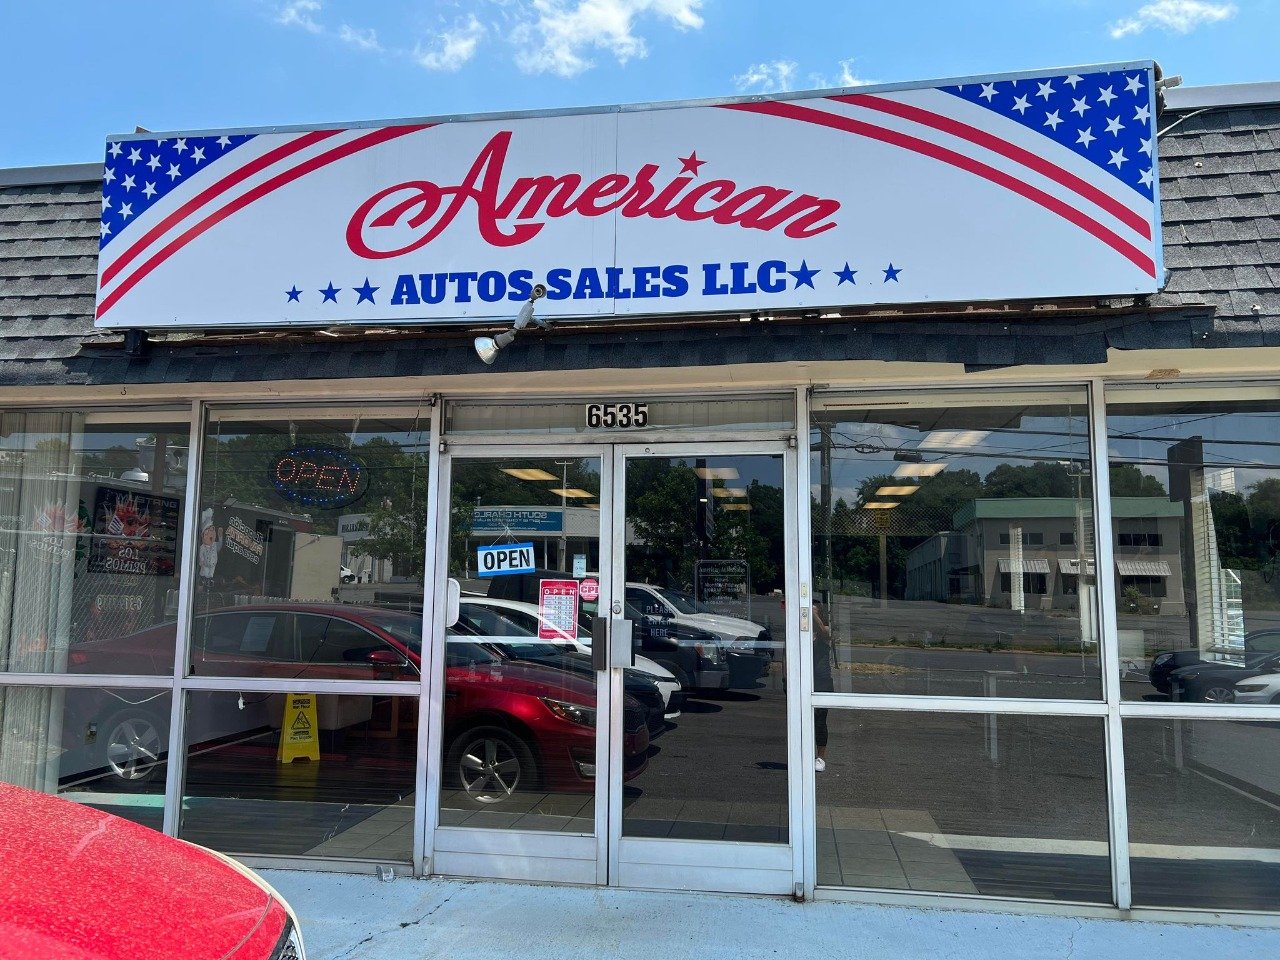 American Auto Sales LLC